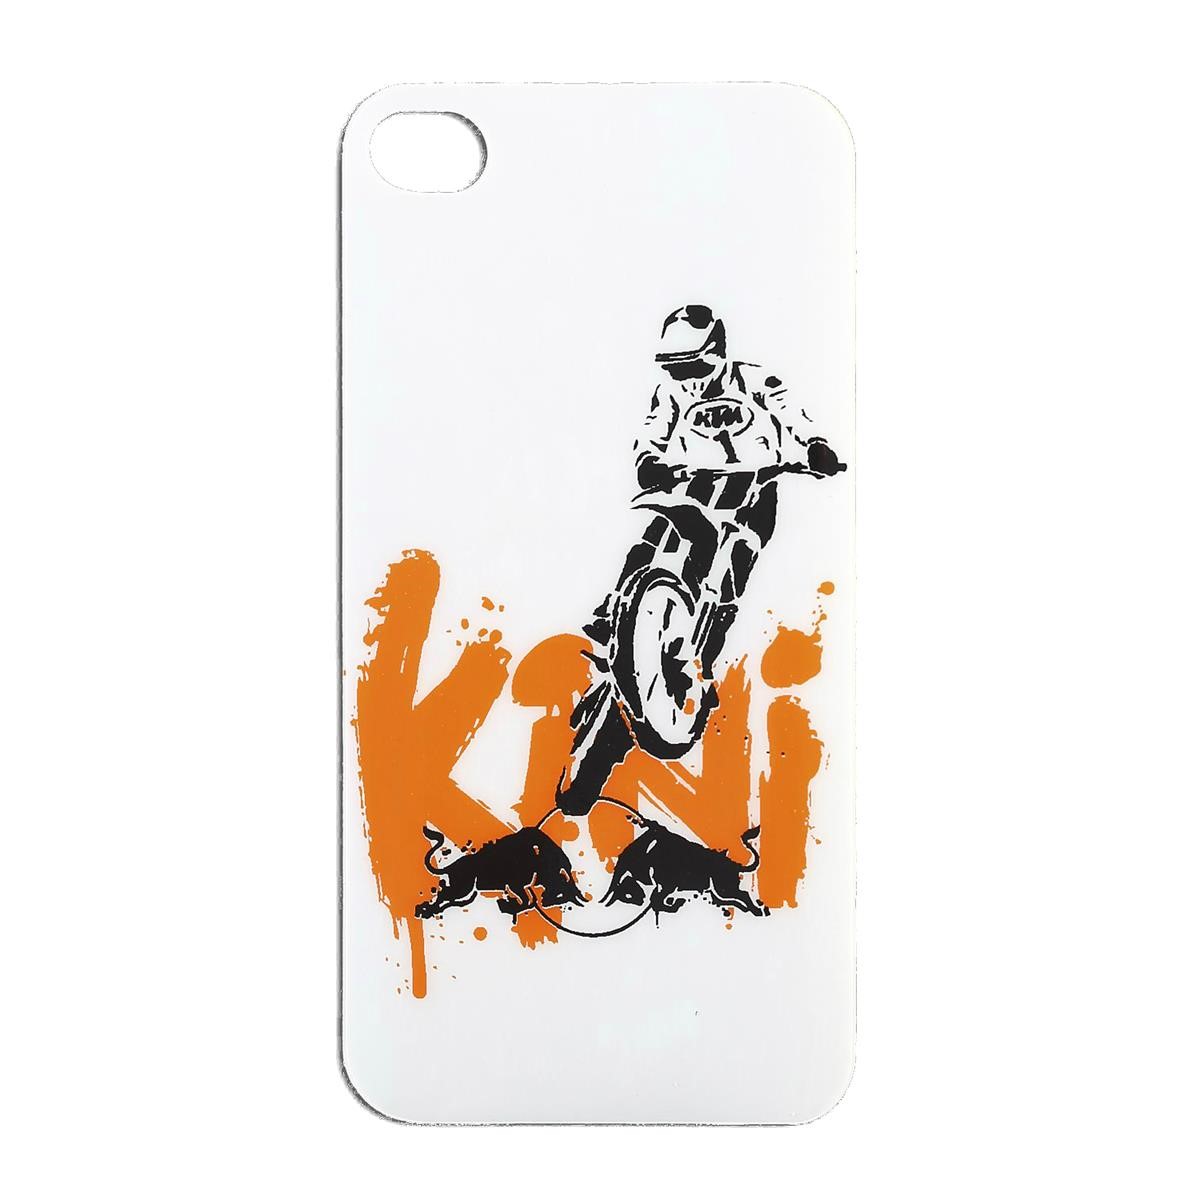 Kini Red Bull iPhone 4/4S-Sticker Stencil Weiß/Schwarz